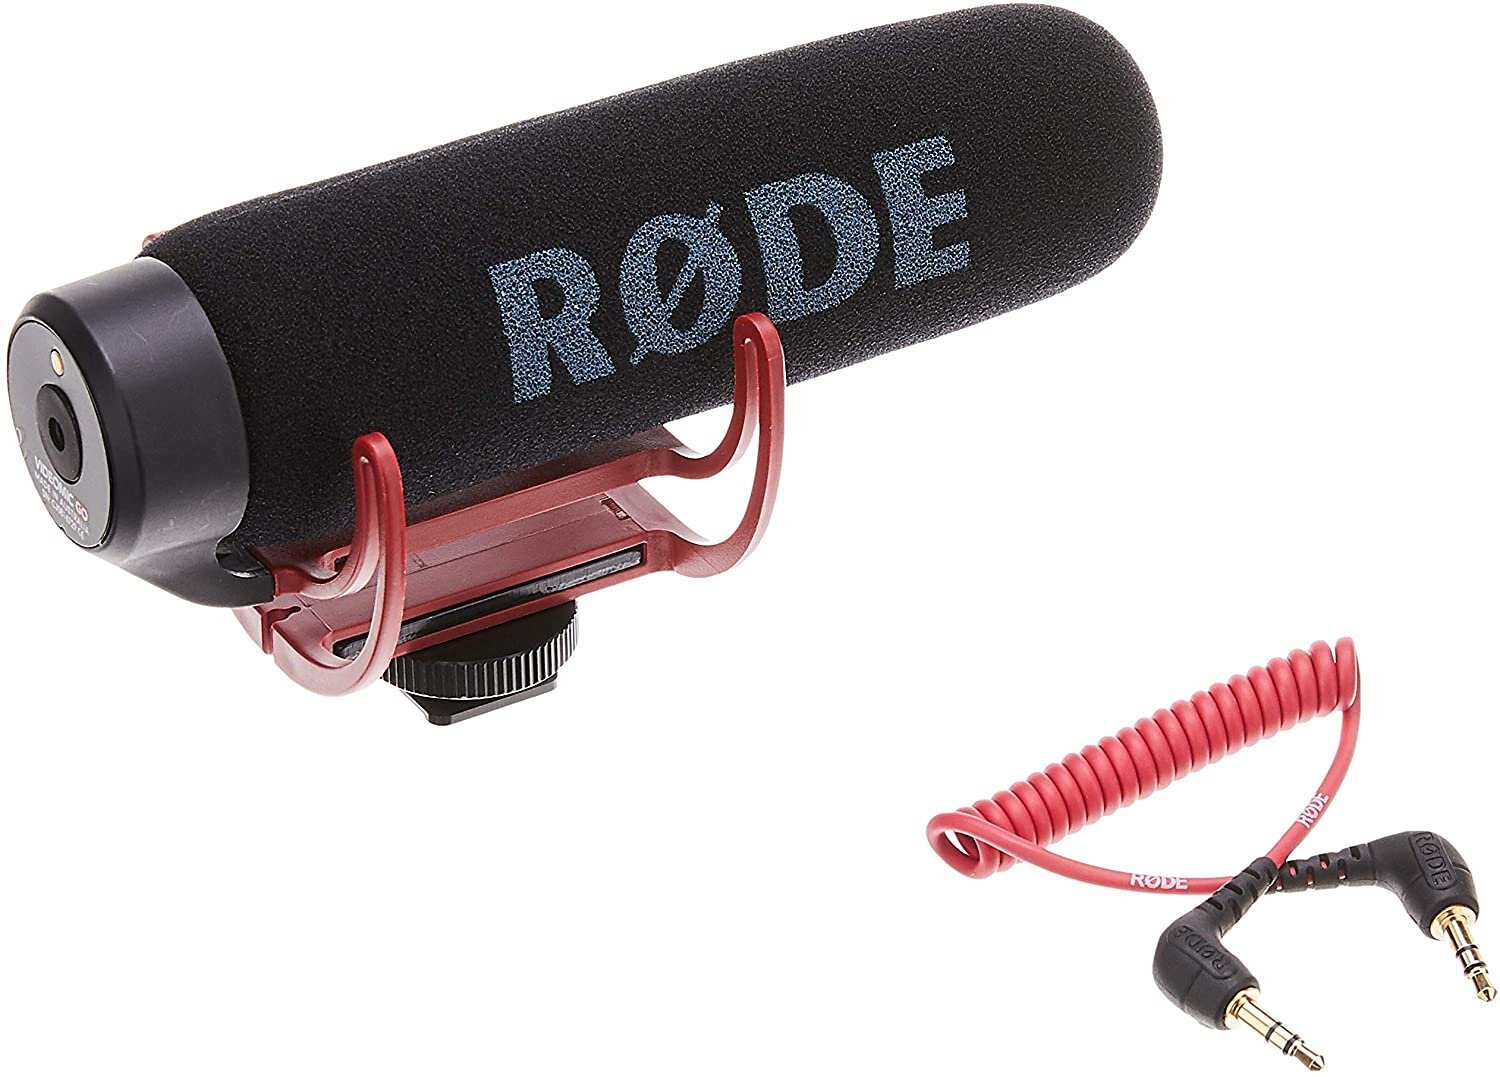 Rode DSLR mic